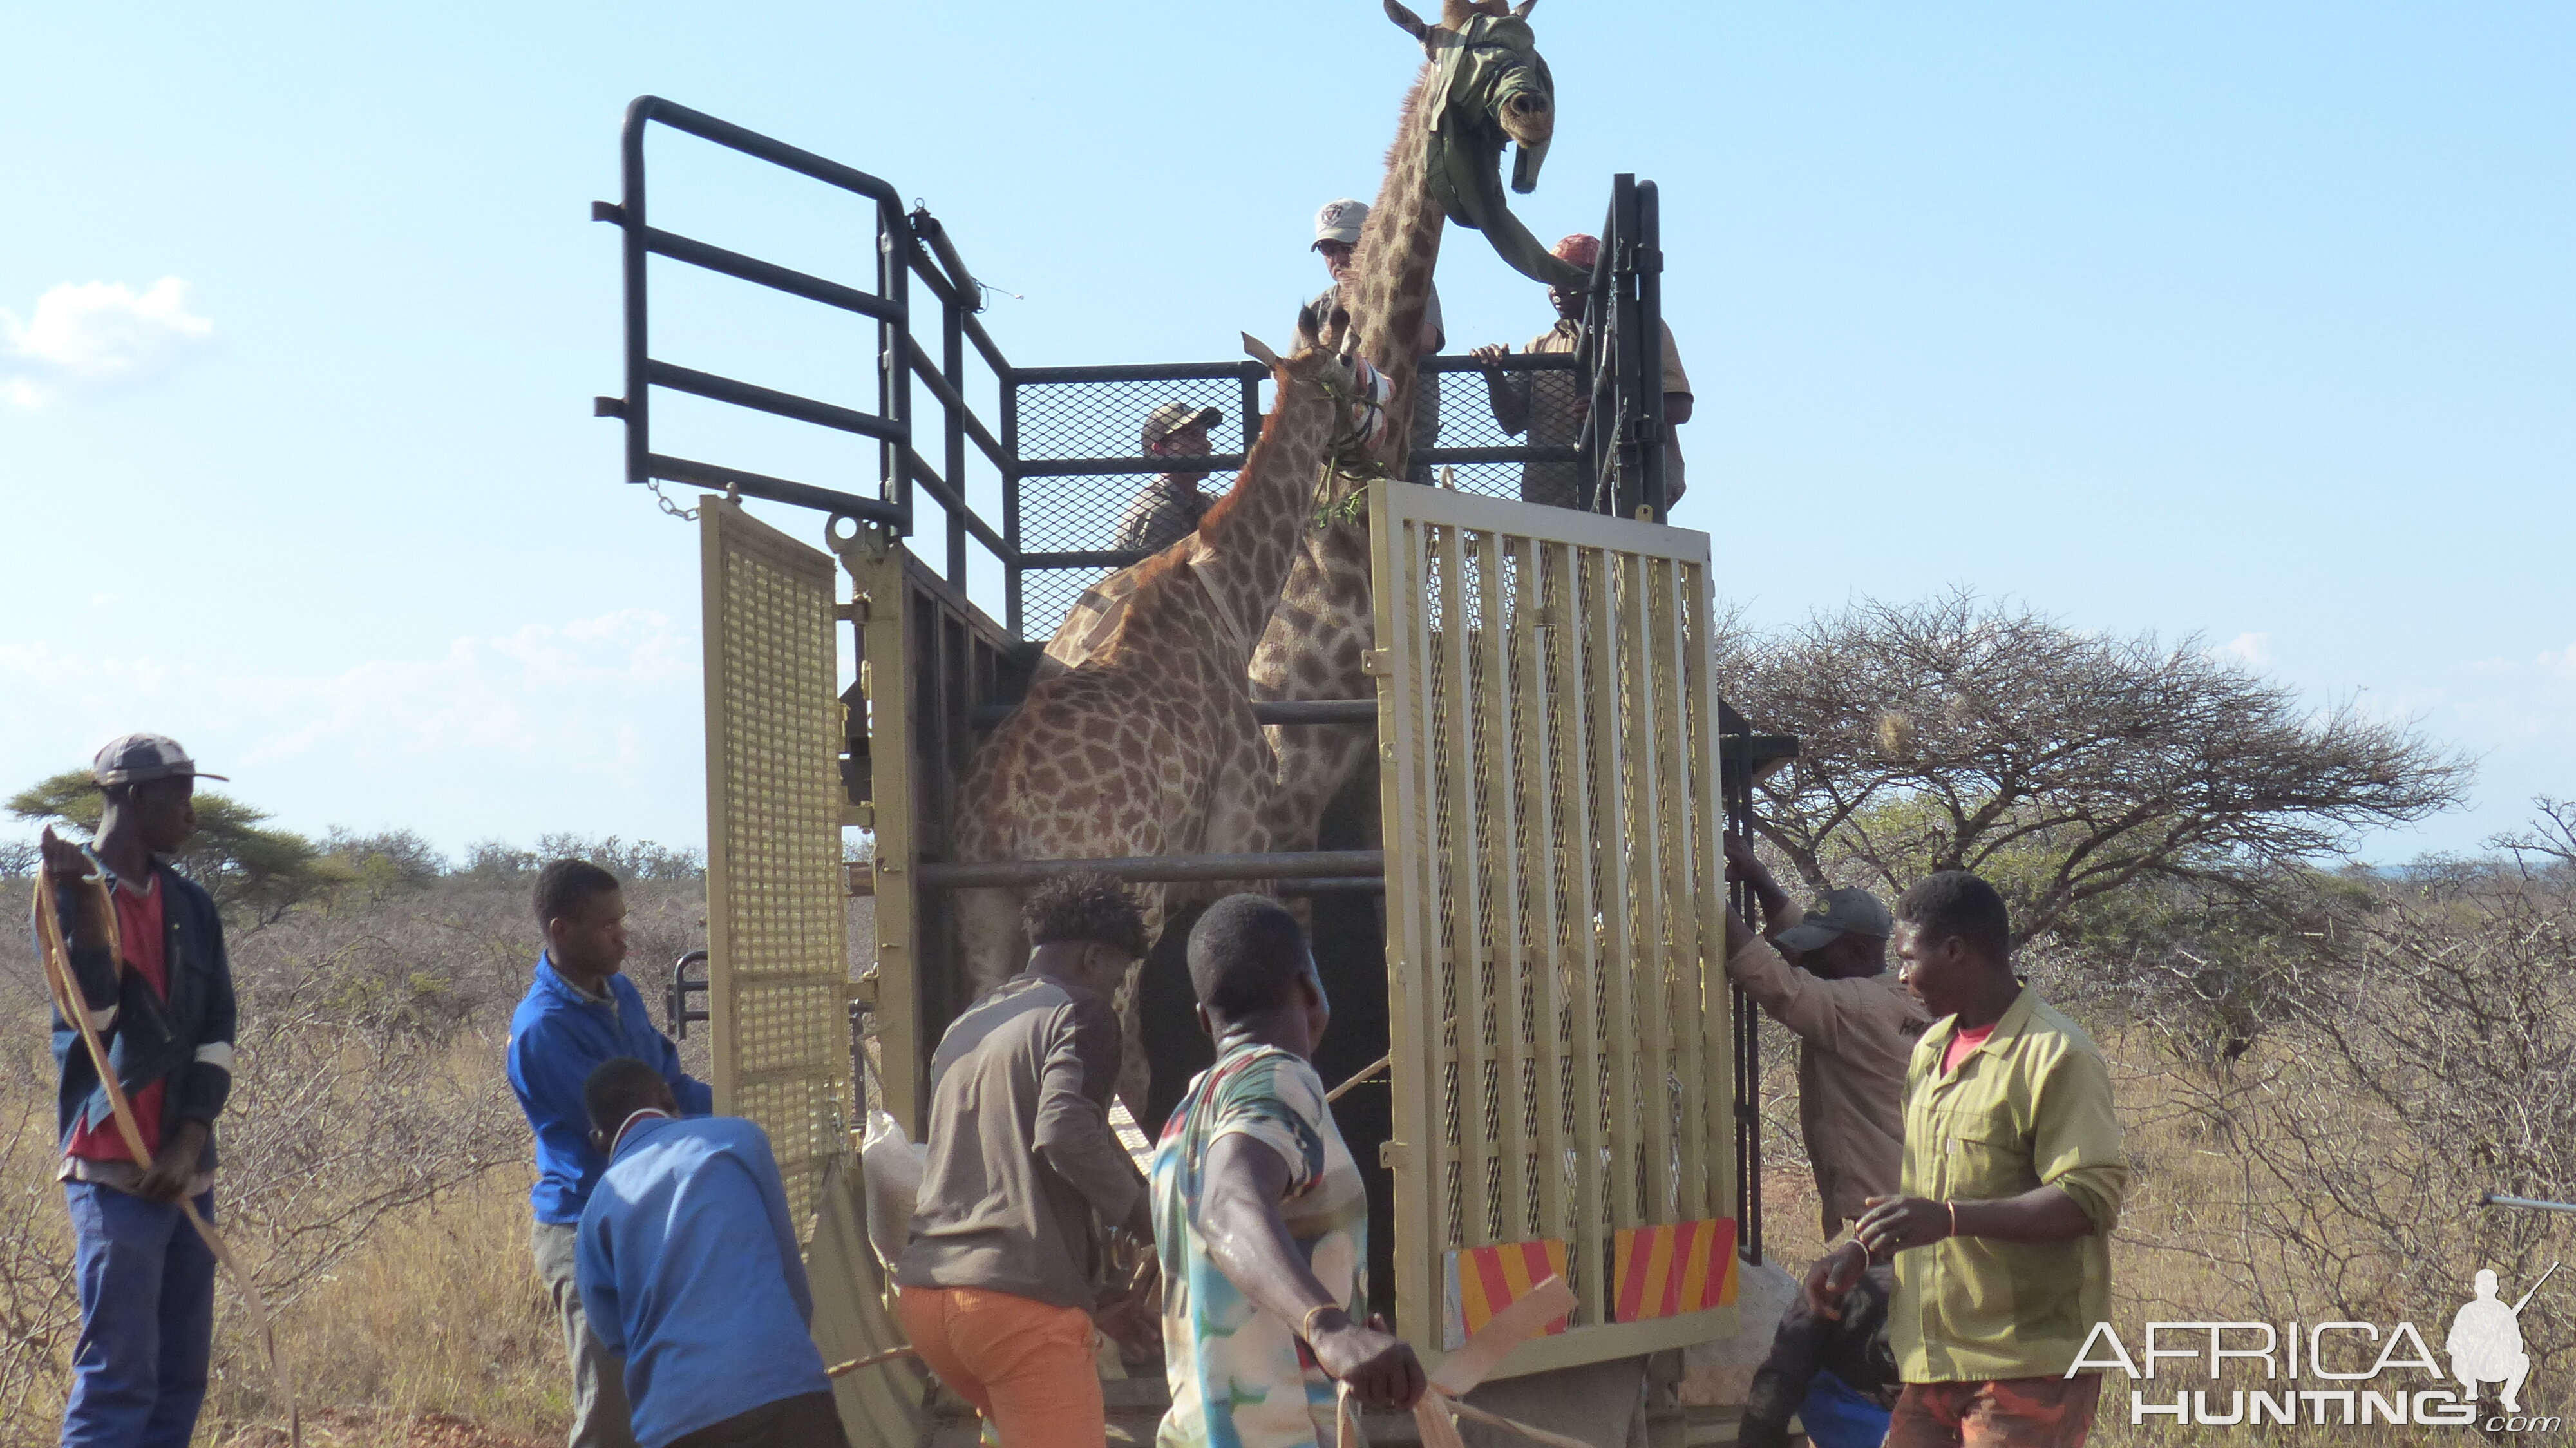 Volunteering on wildlife reserves and with wildlife veterinarians in Africa